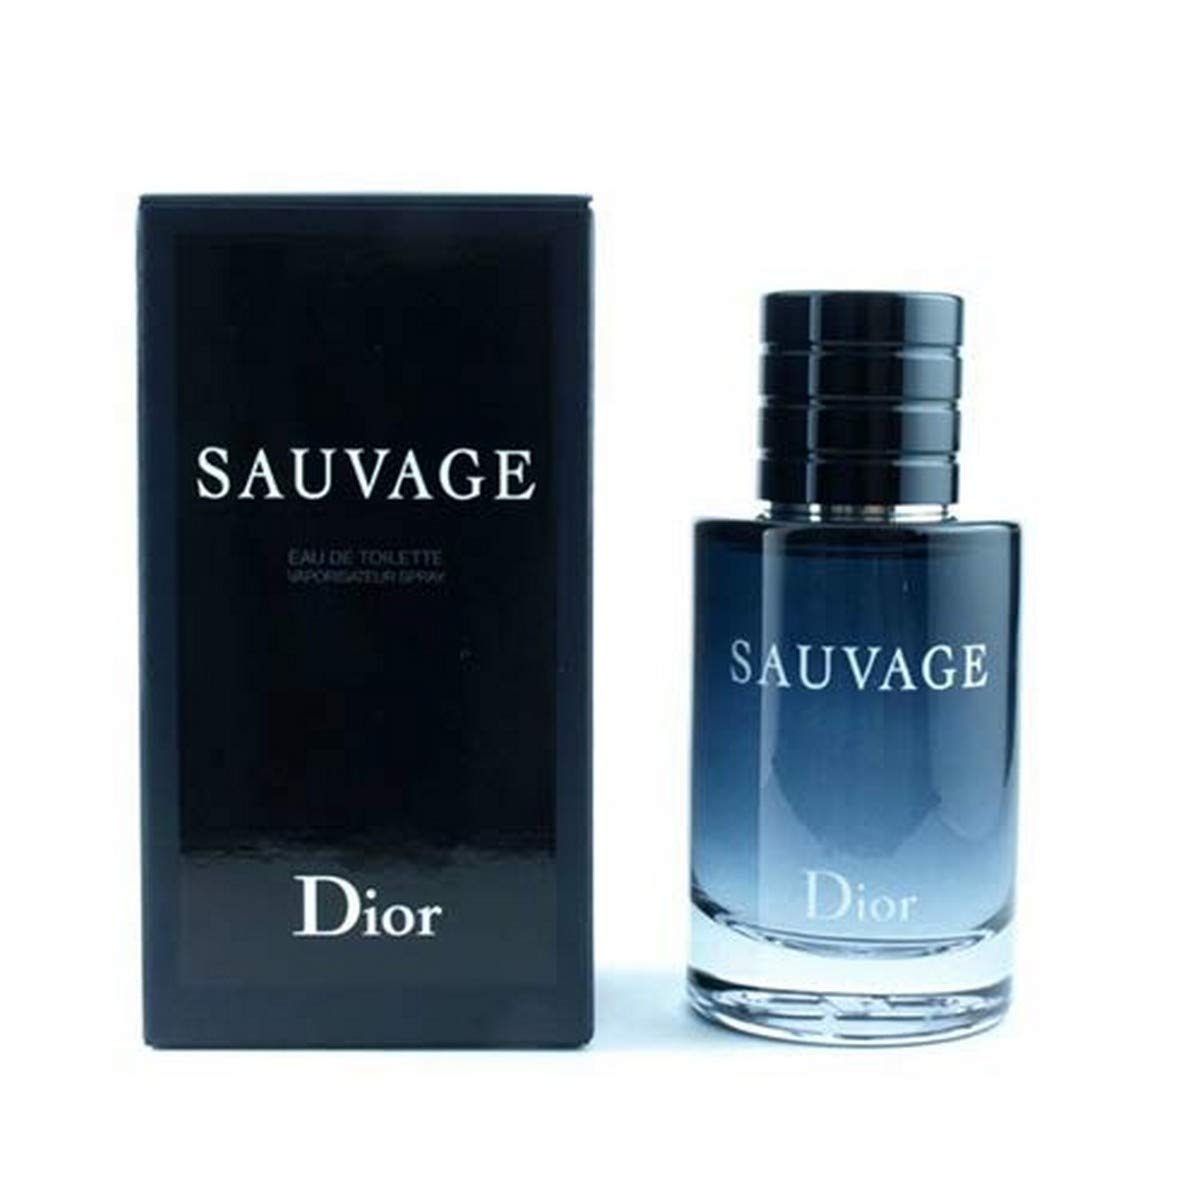 Buy Dior Fragrances Online  Chemist Warehouse